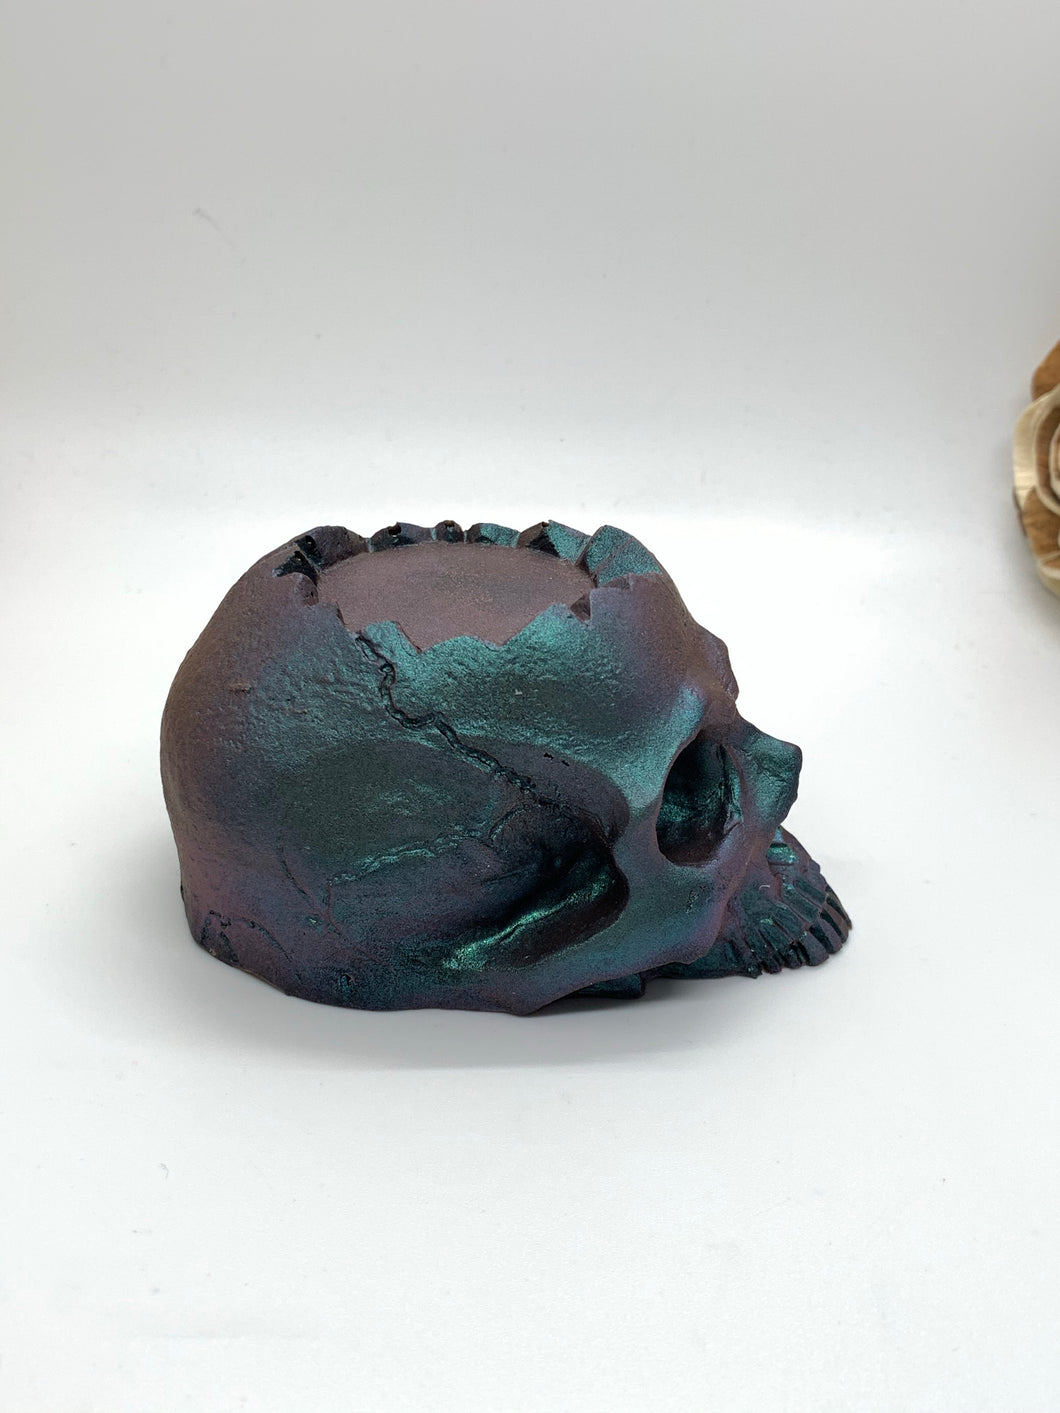 Color Shifting Skull Tea light Holder